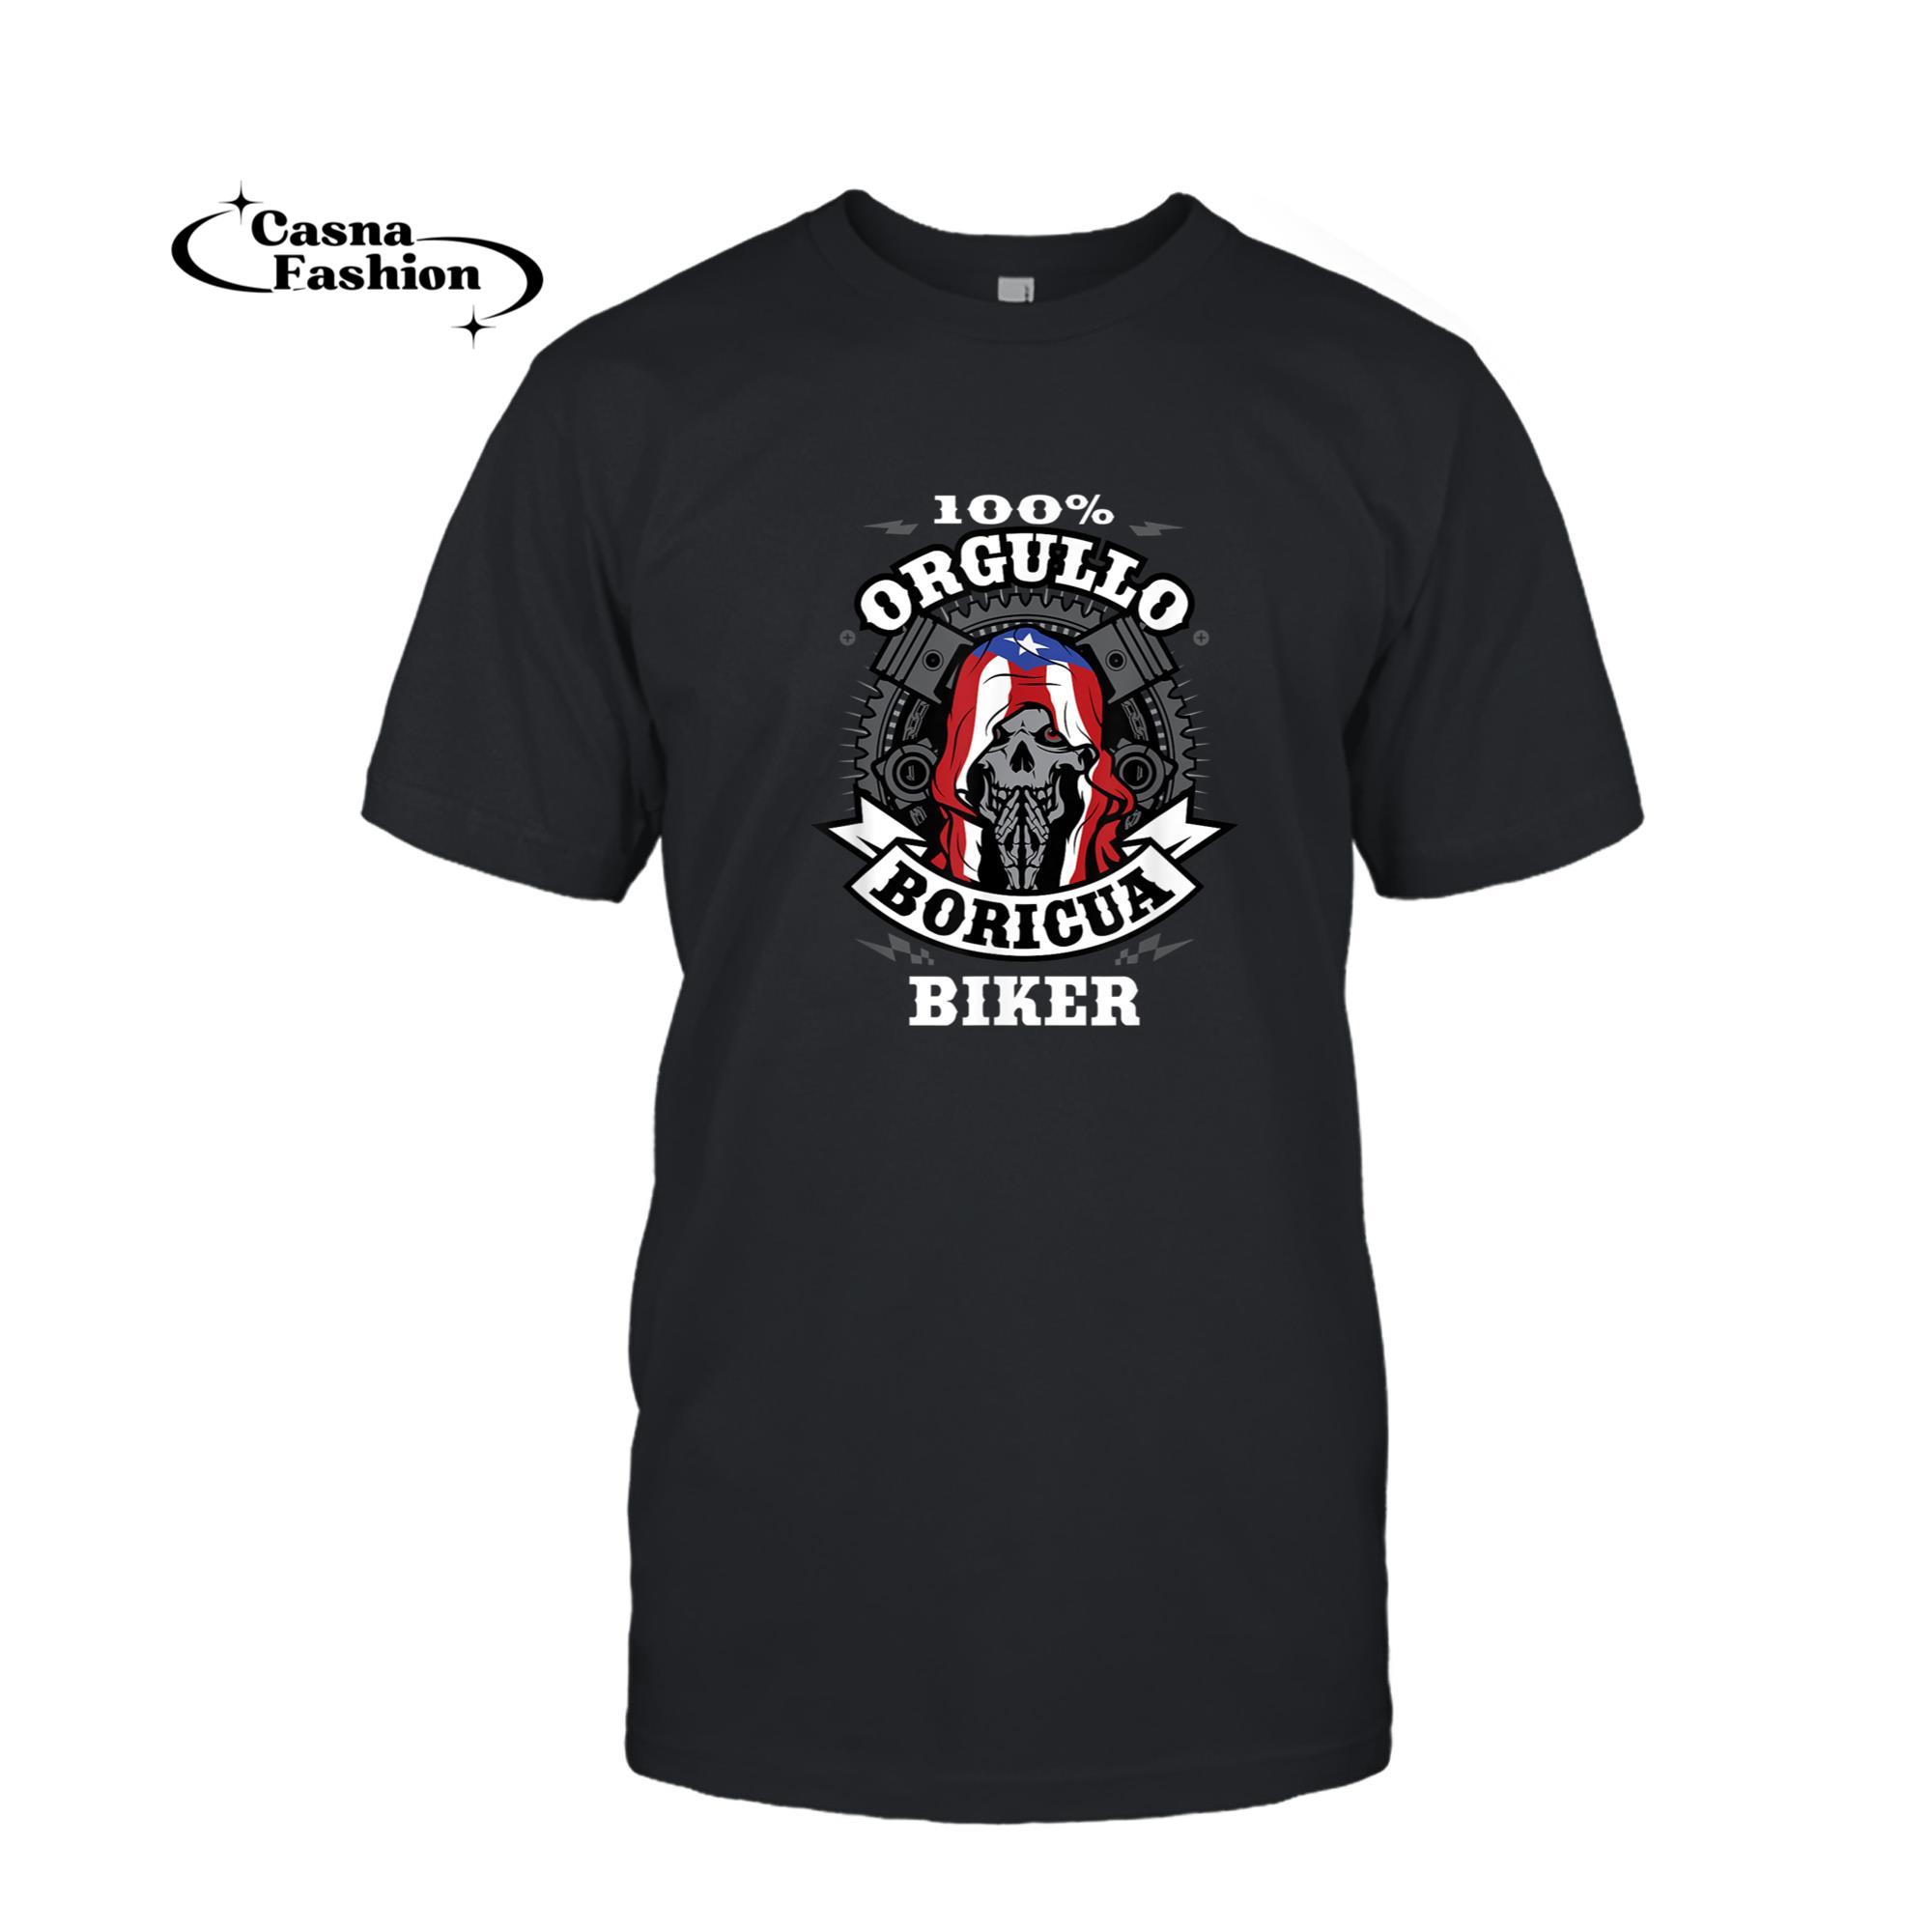 casnafashion_T-shirt_100% Orgullo Boricua ( Puerto Rican Pride ) Biker T-Shirt_T-shirt_Black